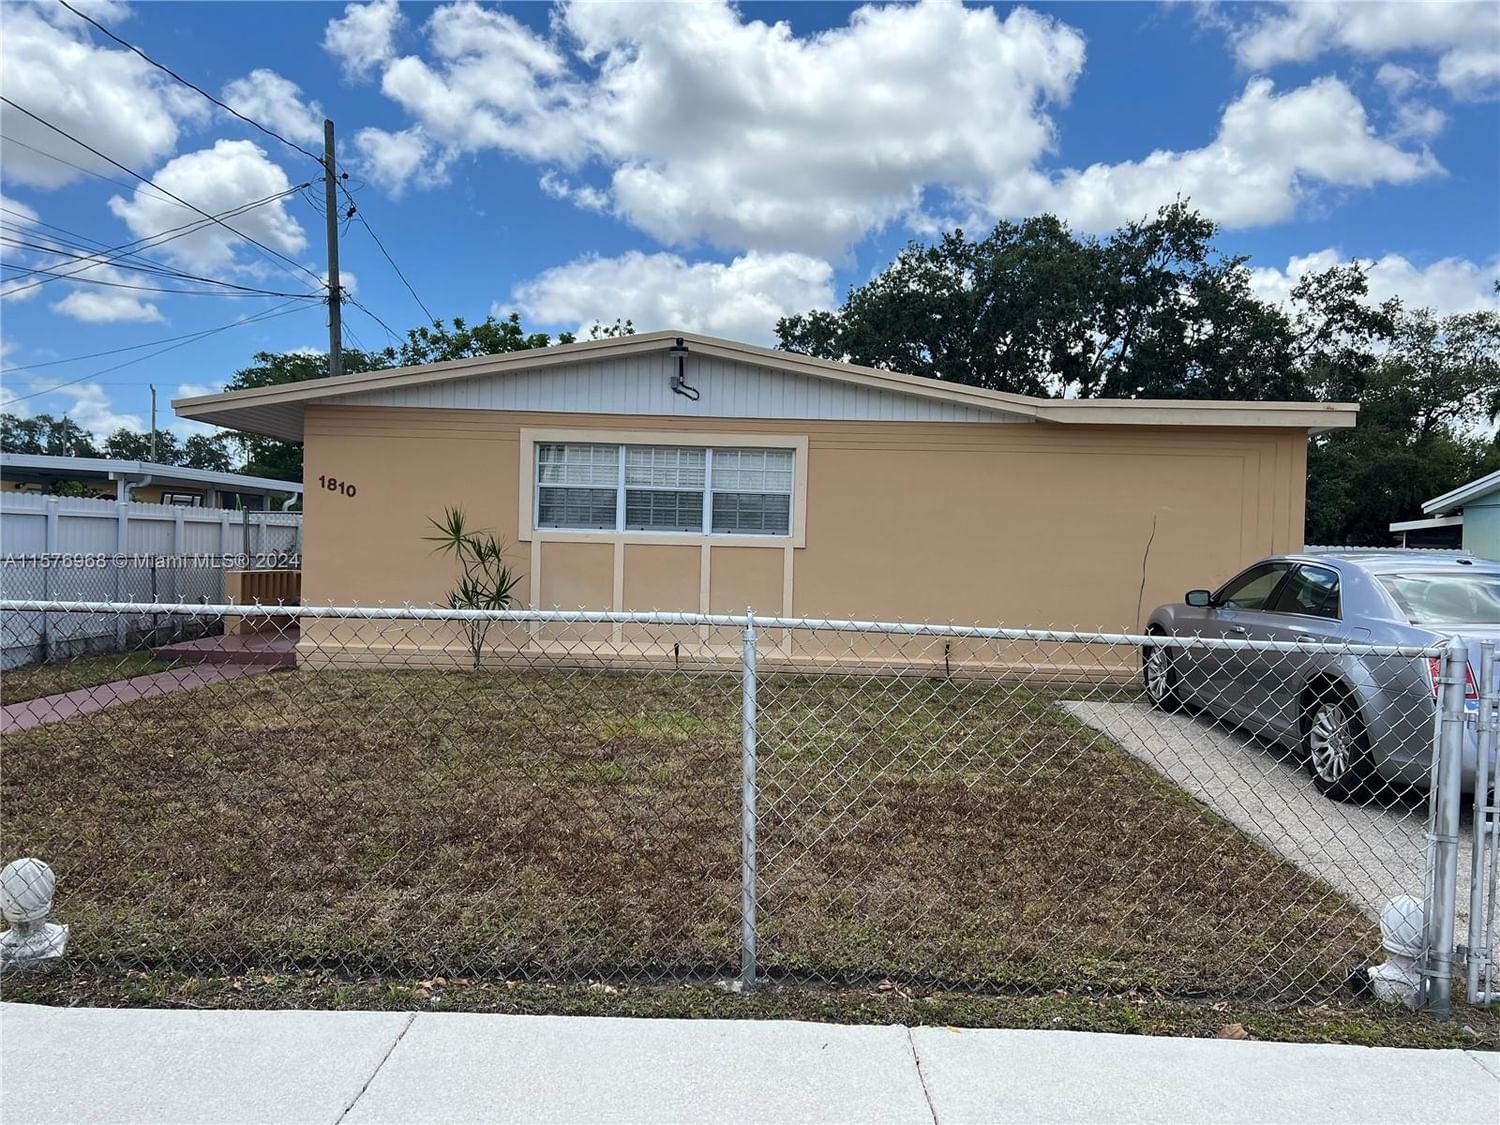 Real estate property located at 1810 152 TE, Miami-Dade County, RAINBOW PARK, Miami Gardens, FL